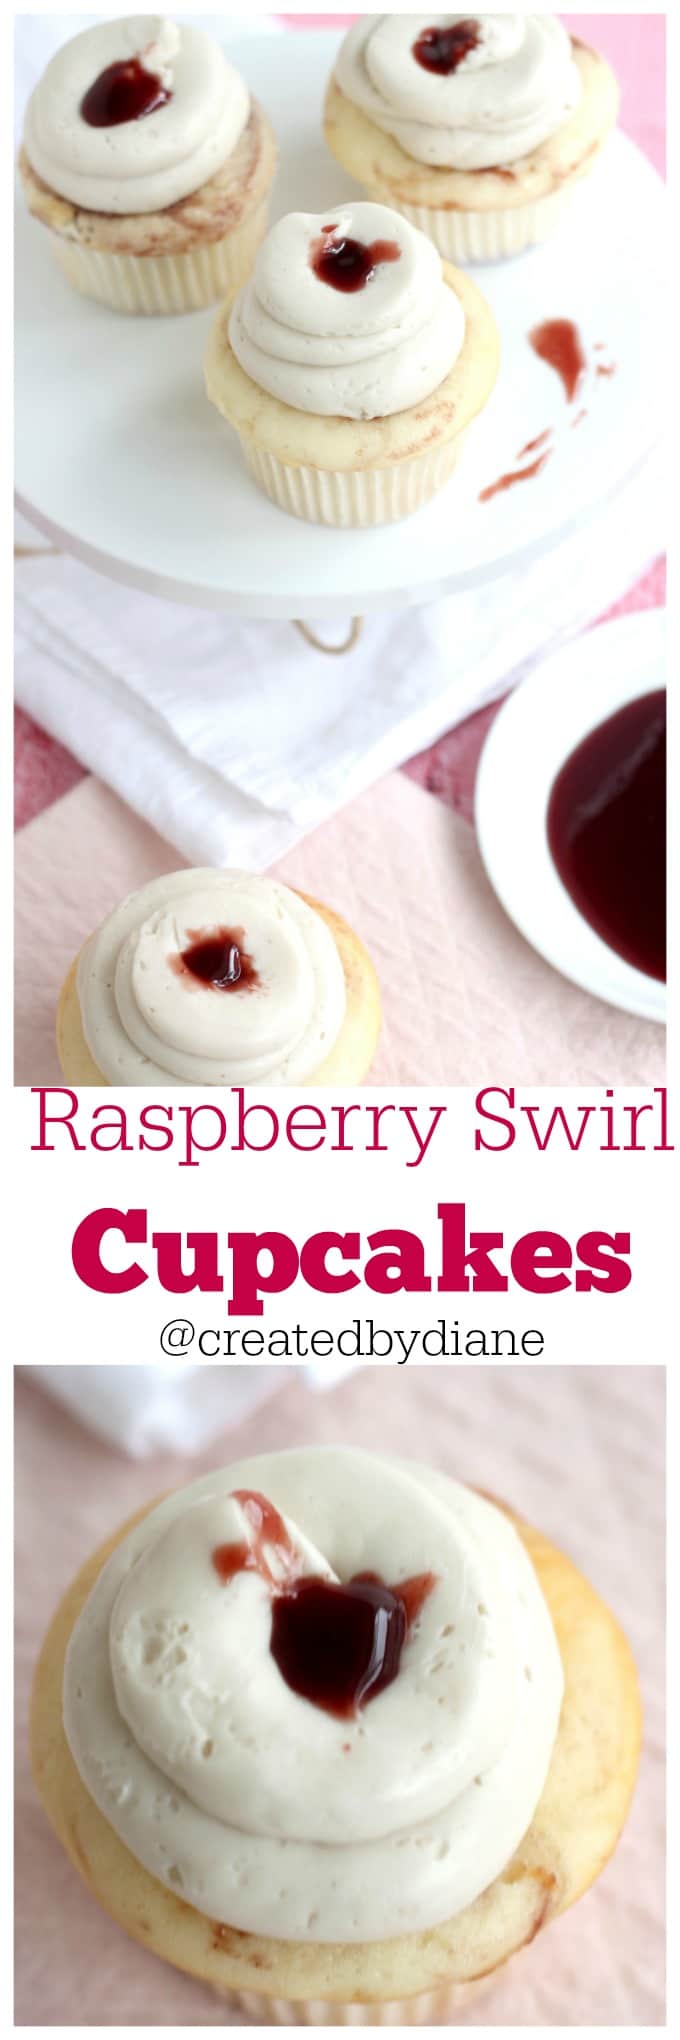 Raspberry Swirl Cupcakes from @createdbydiane